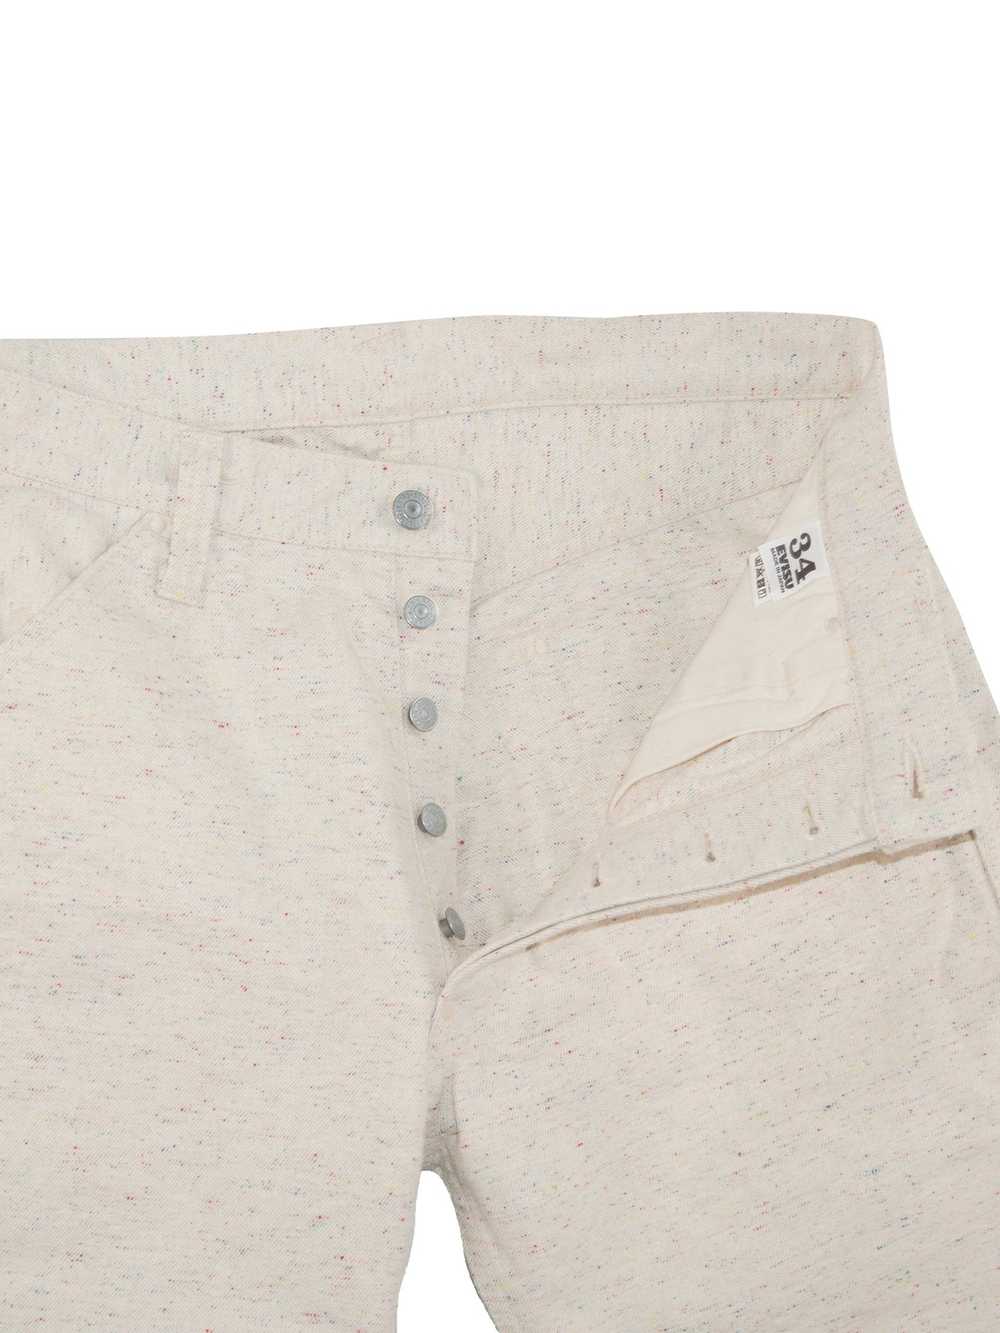 Evisu Multicolor Tweed White Denim Jeans Pants - image 6